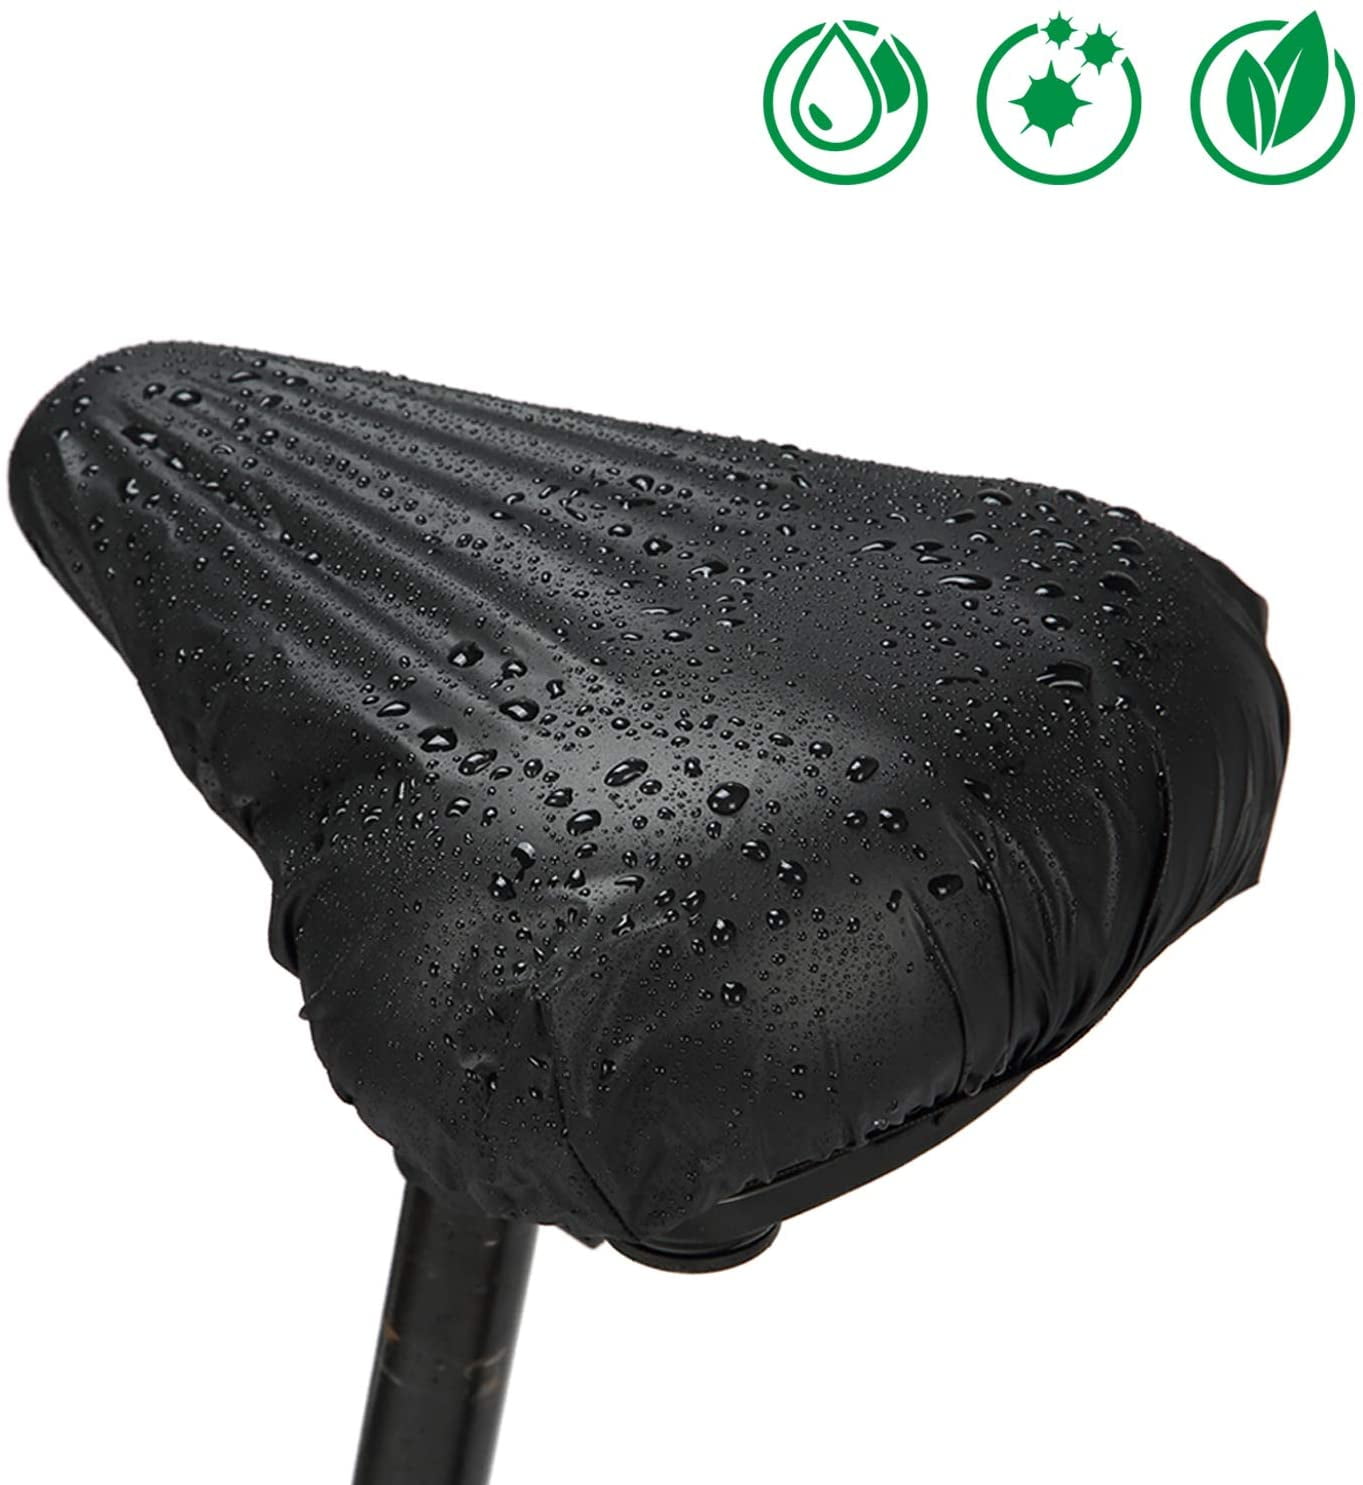 Black 1*Waterproof Rainproof Seat Cover Bicycle Saddle Plastic Rain Cover W6H 